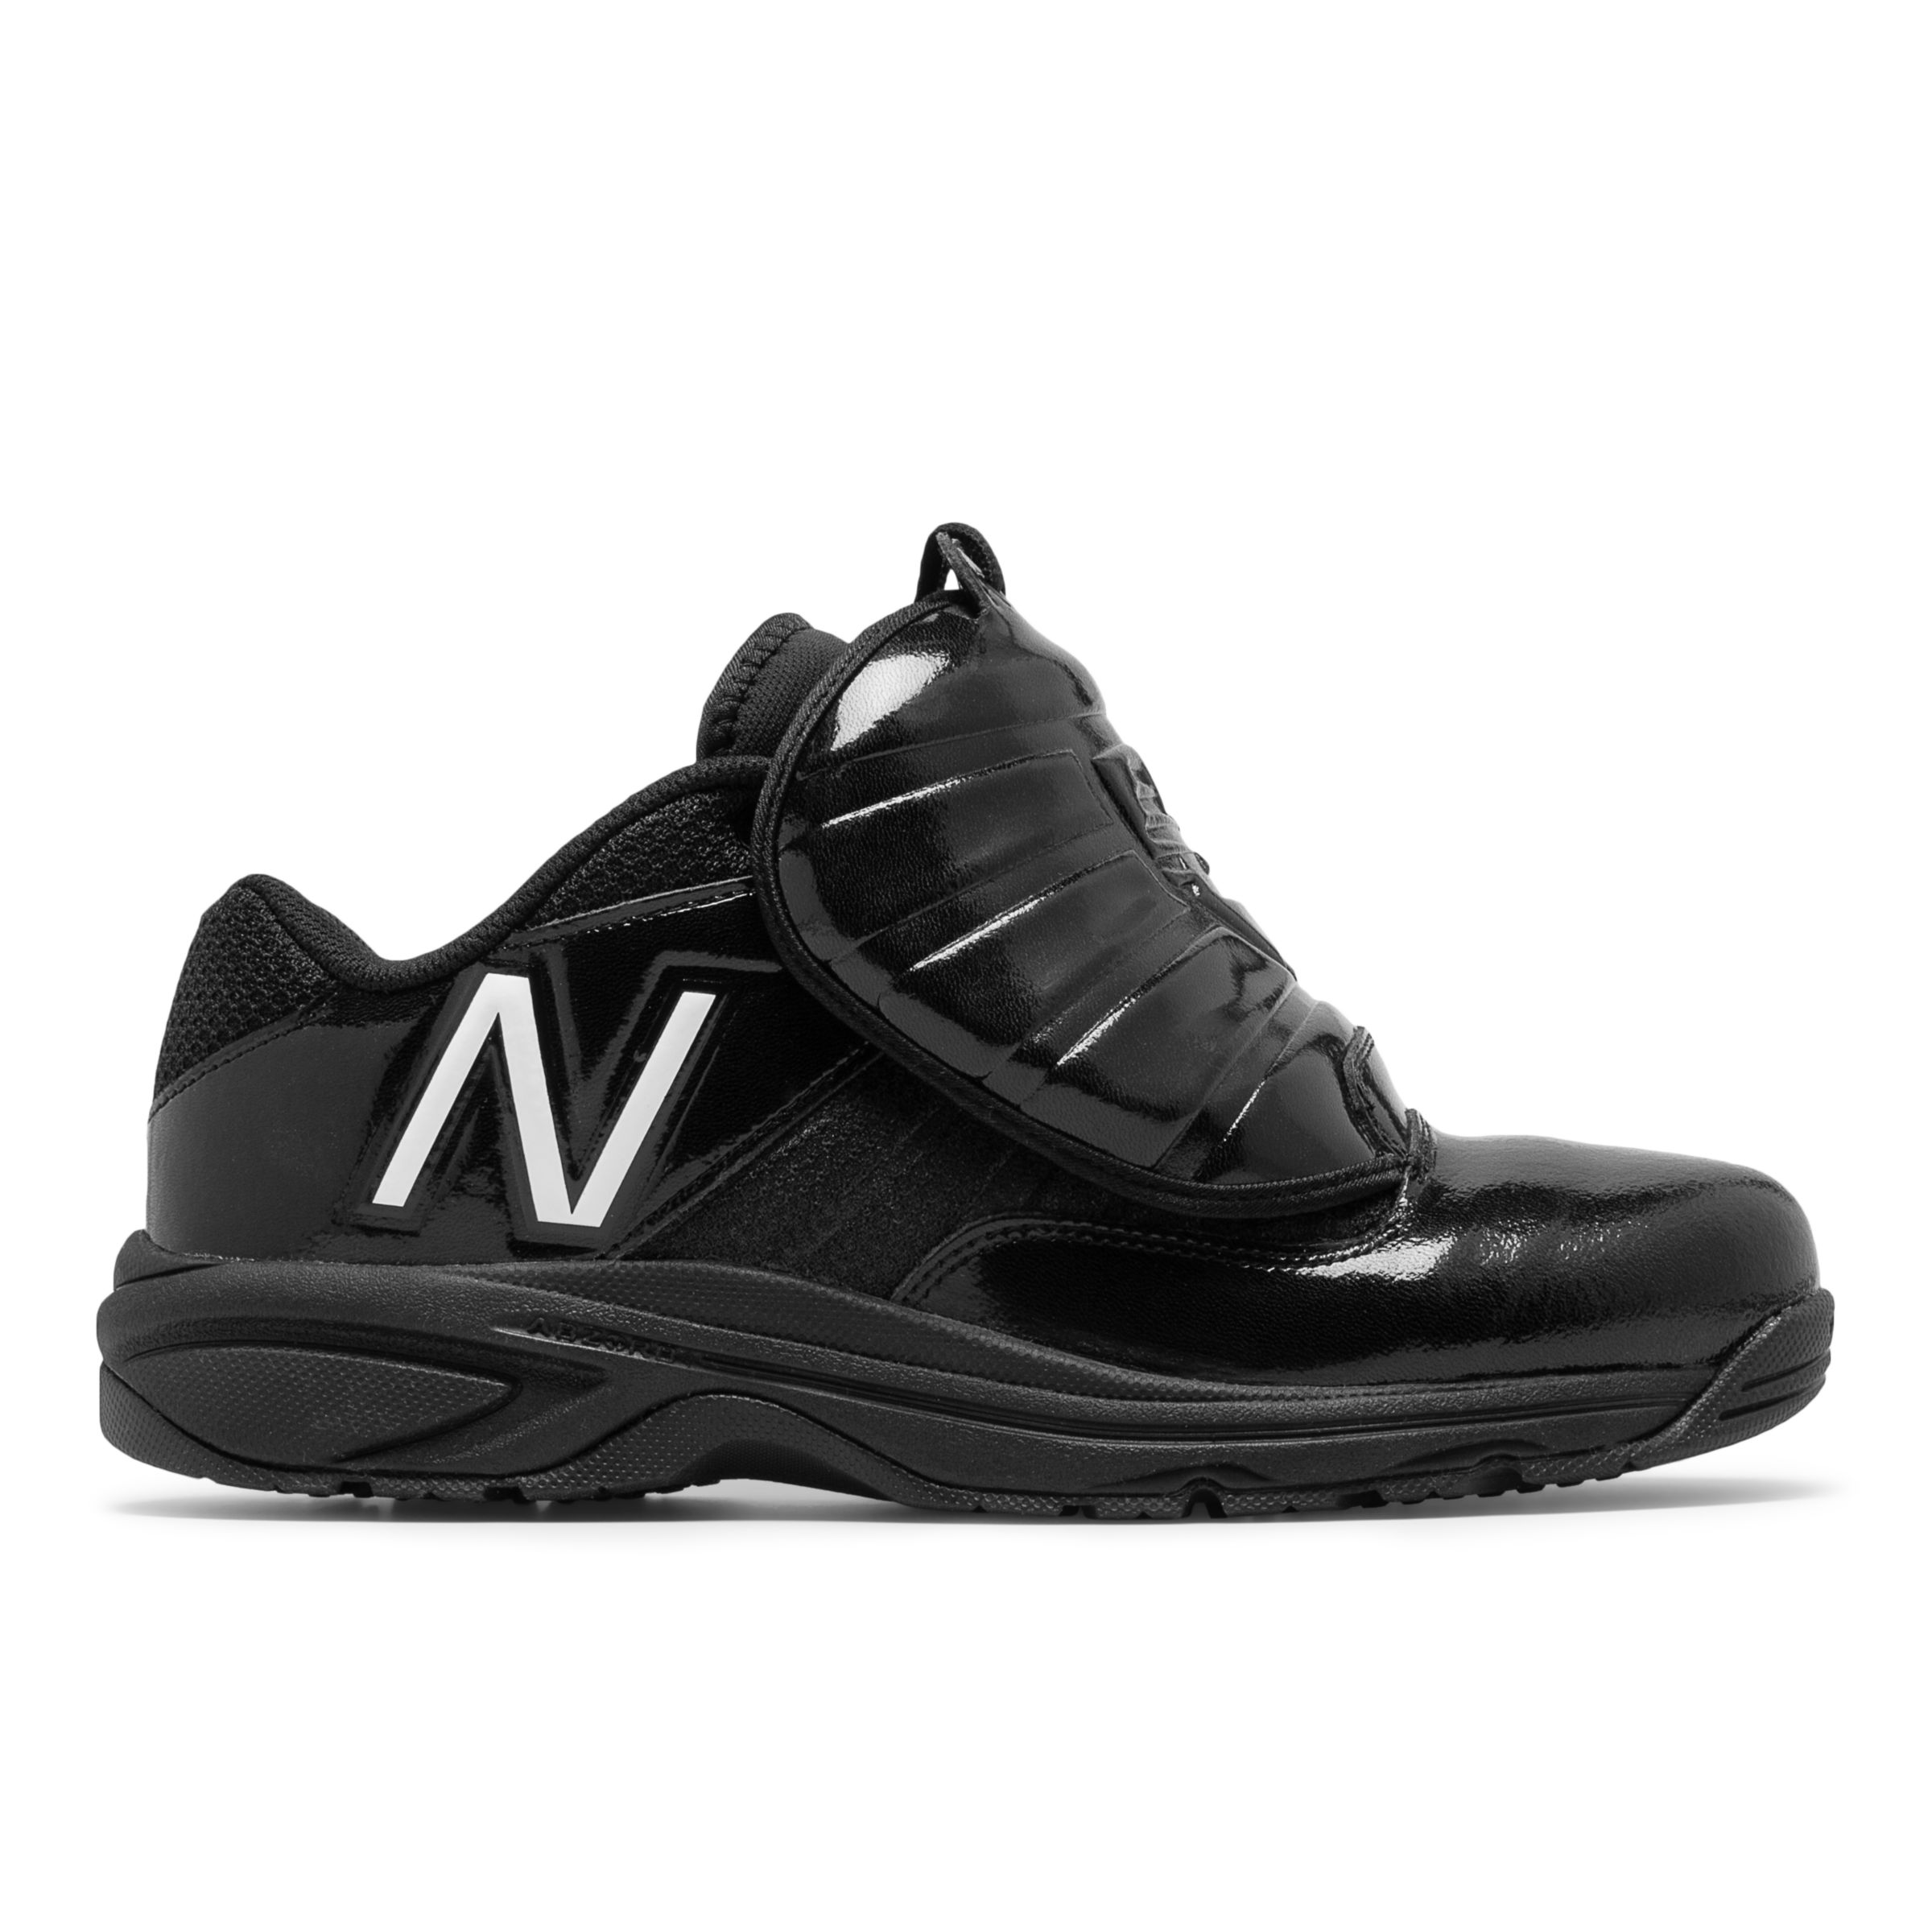 Comfortable Umpire Shoes - New Balance